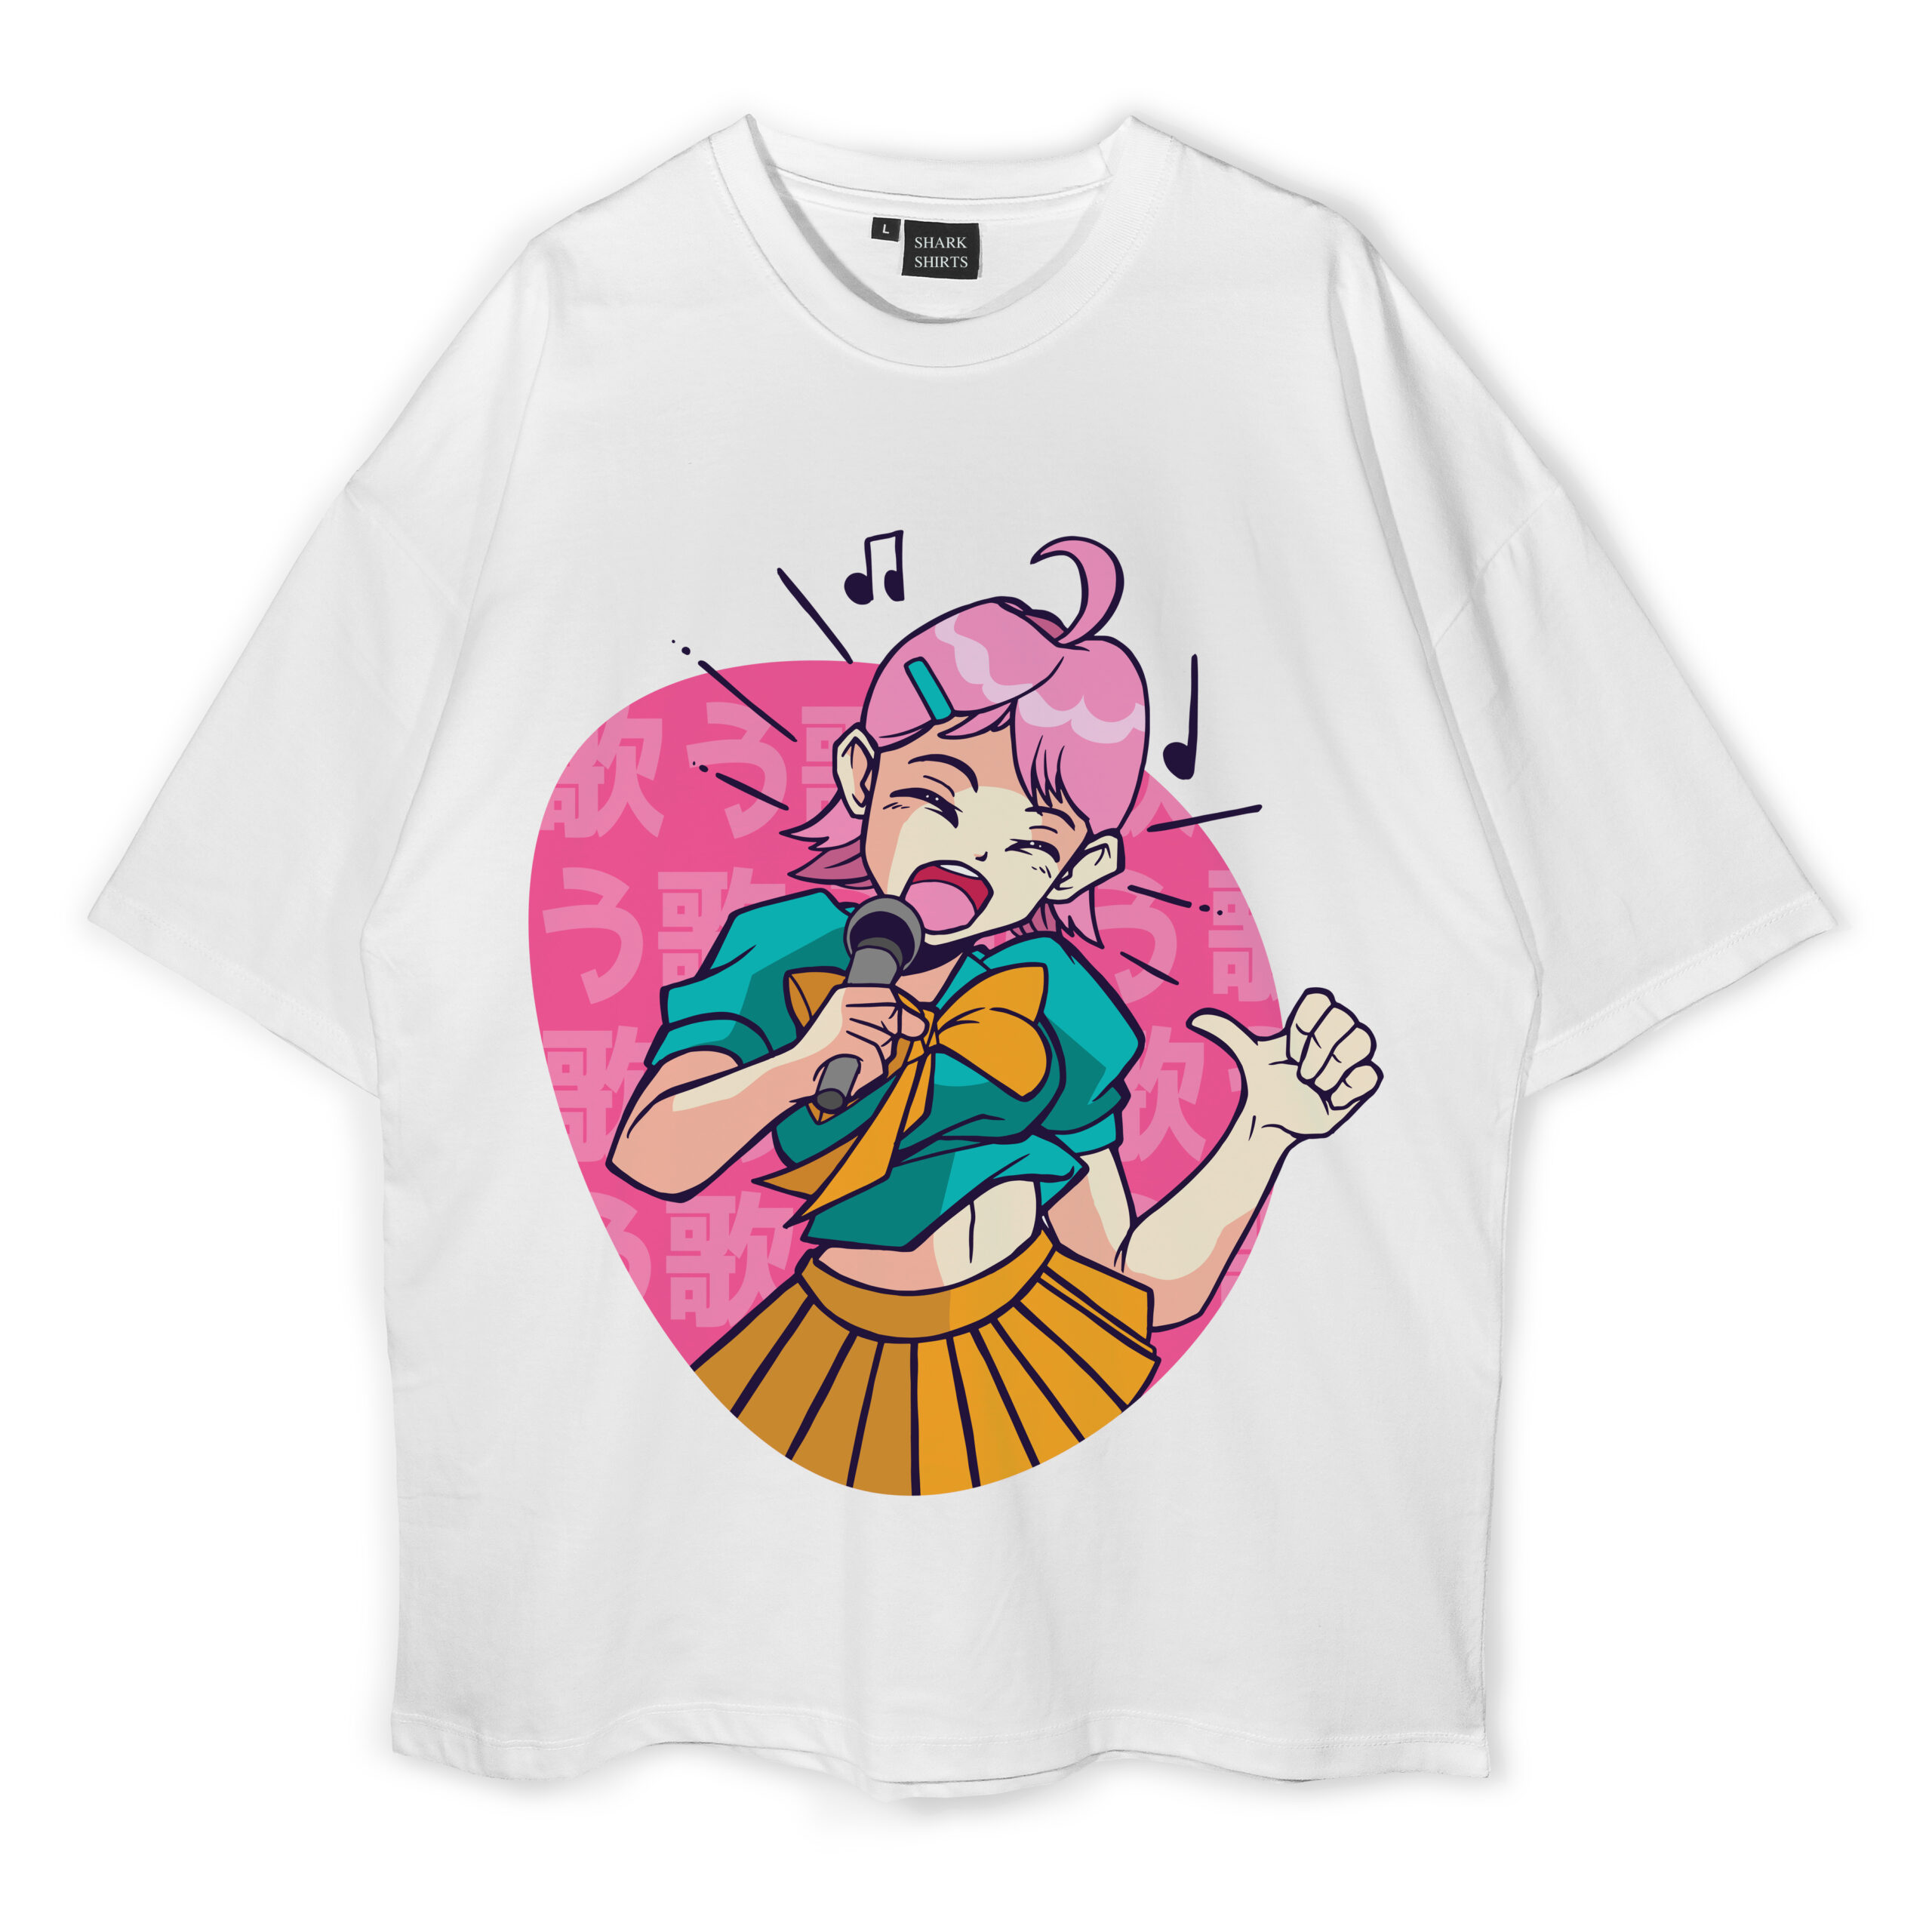 Buy Aarnish Tshirt  Anime Girl  Printed Tshirt  Anime Tshirt Medium  White at Amazonin